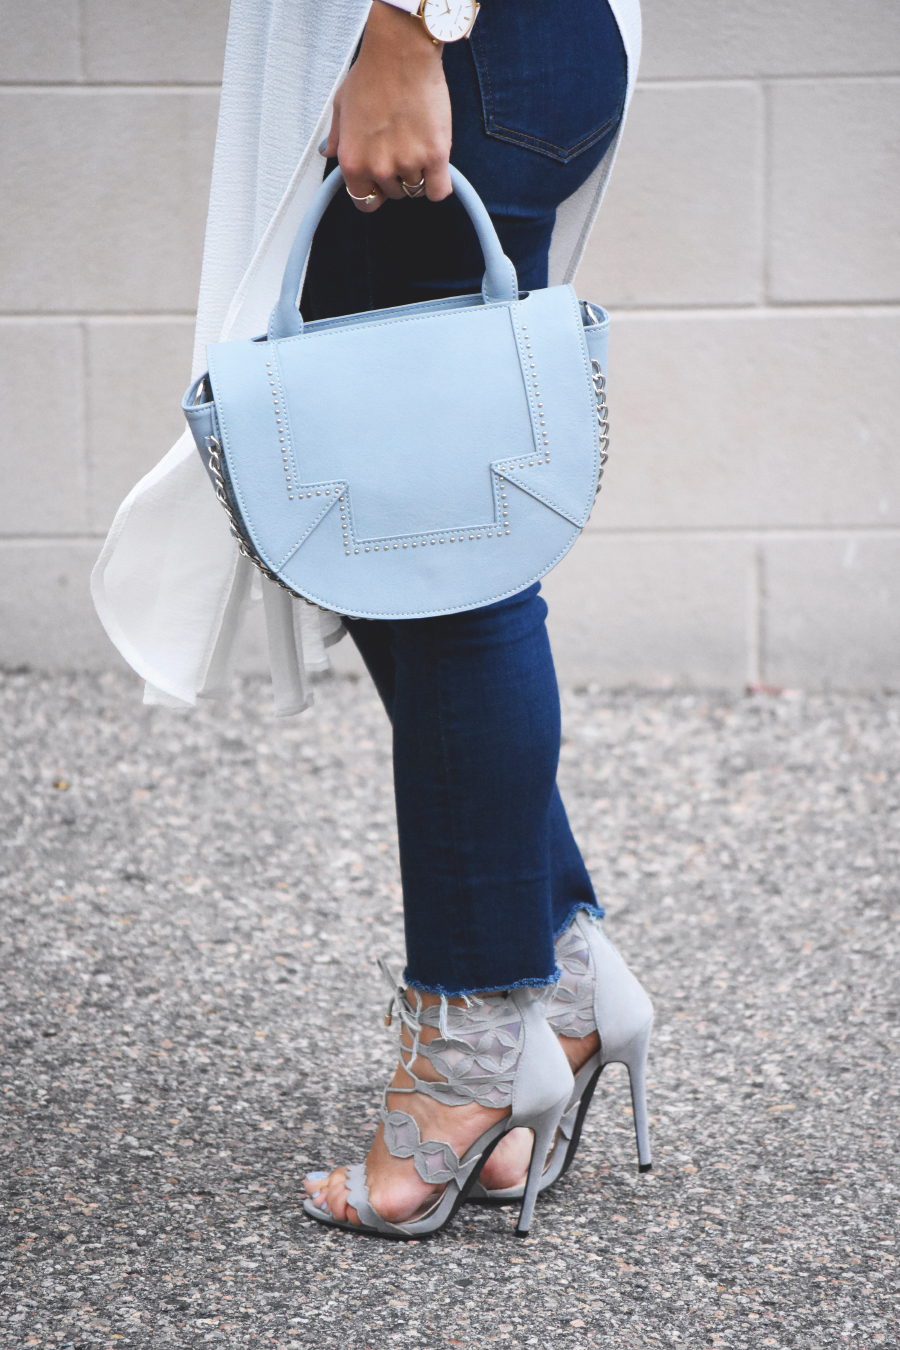 Danielle Nicole blue handbag